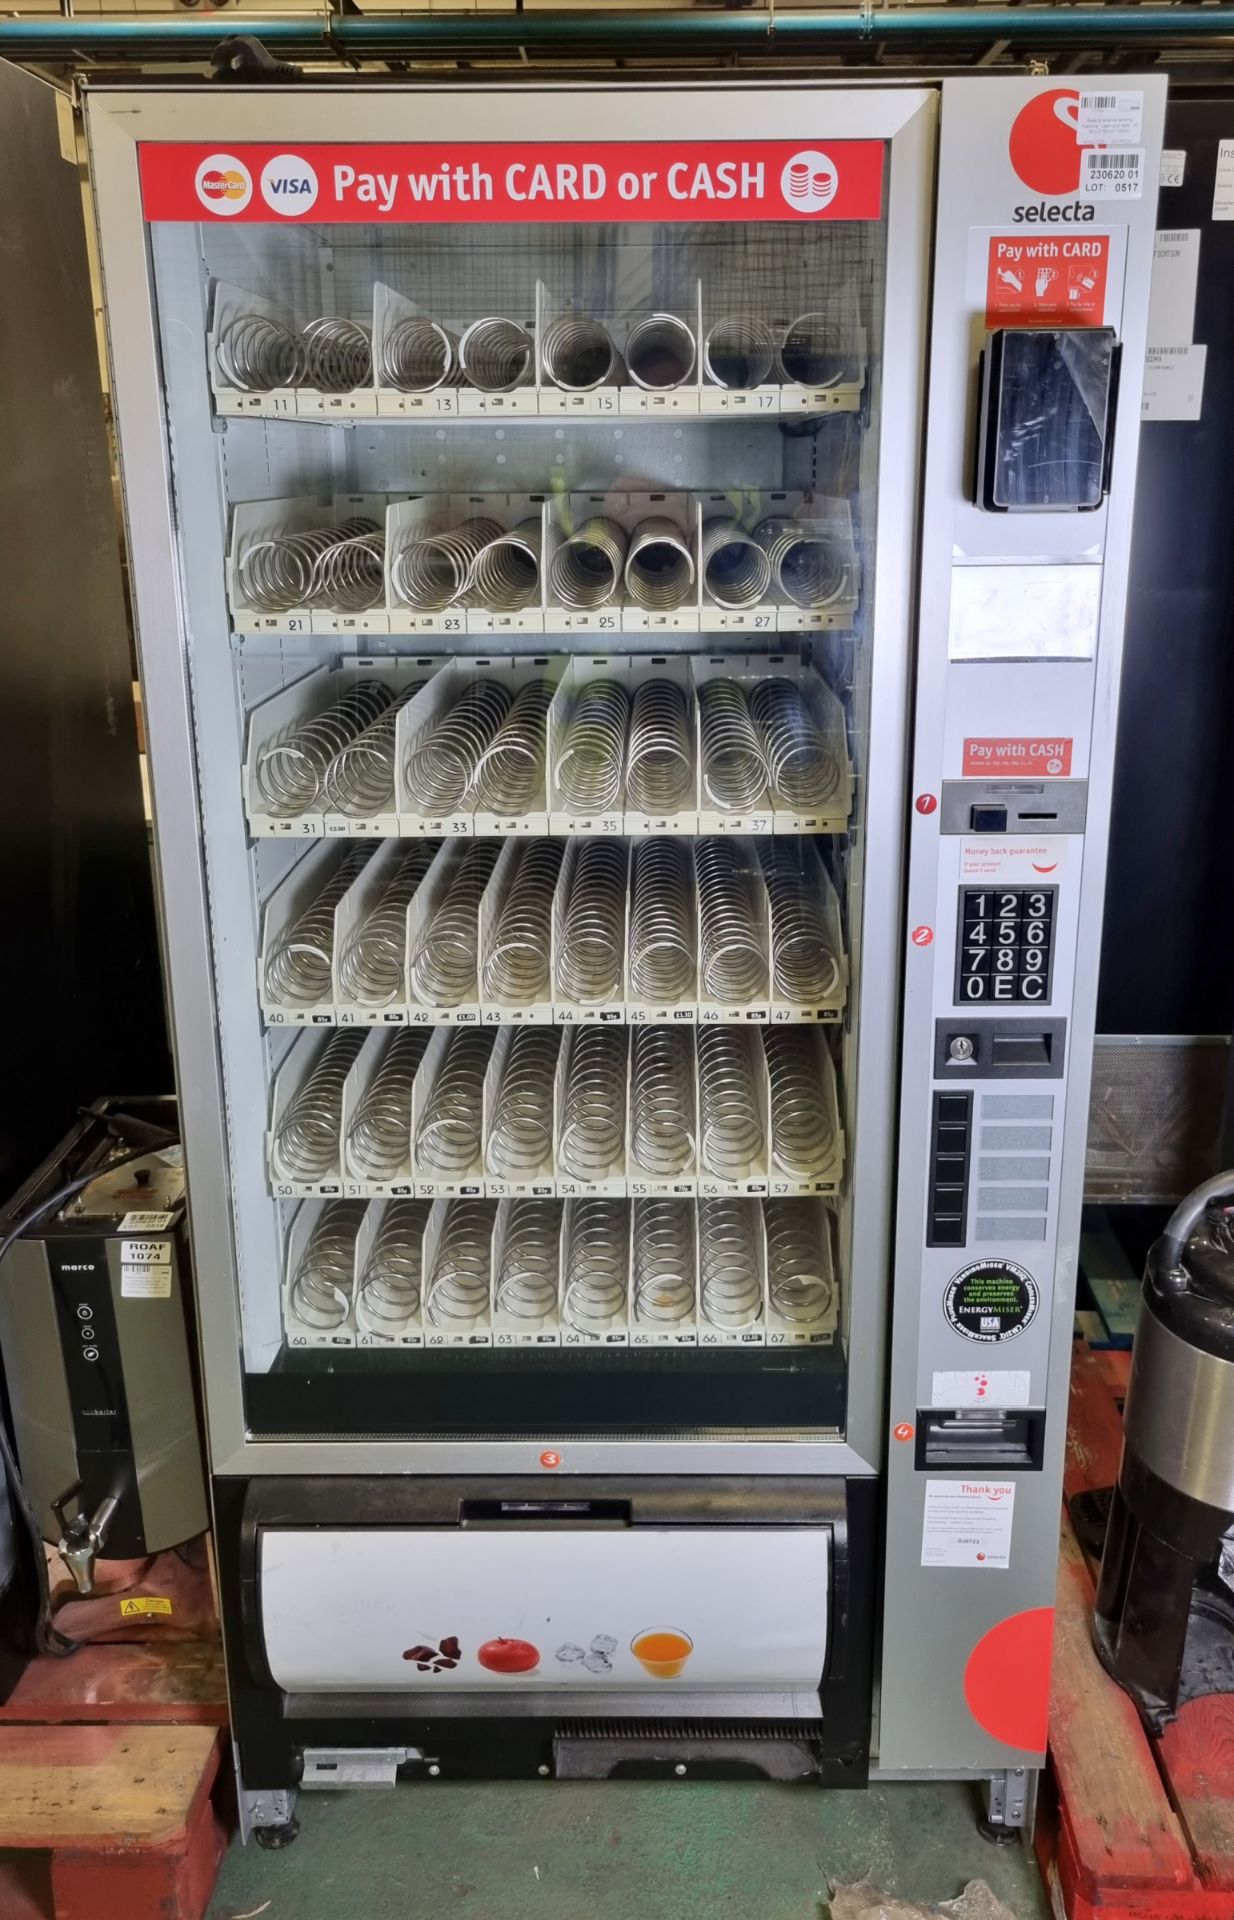 Selecta snacks vending machine - cash and card - W 900 x D 800 x H 1850mm - NO KEYS